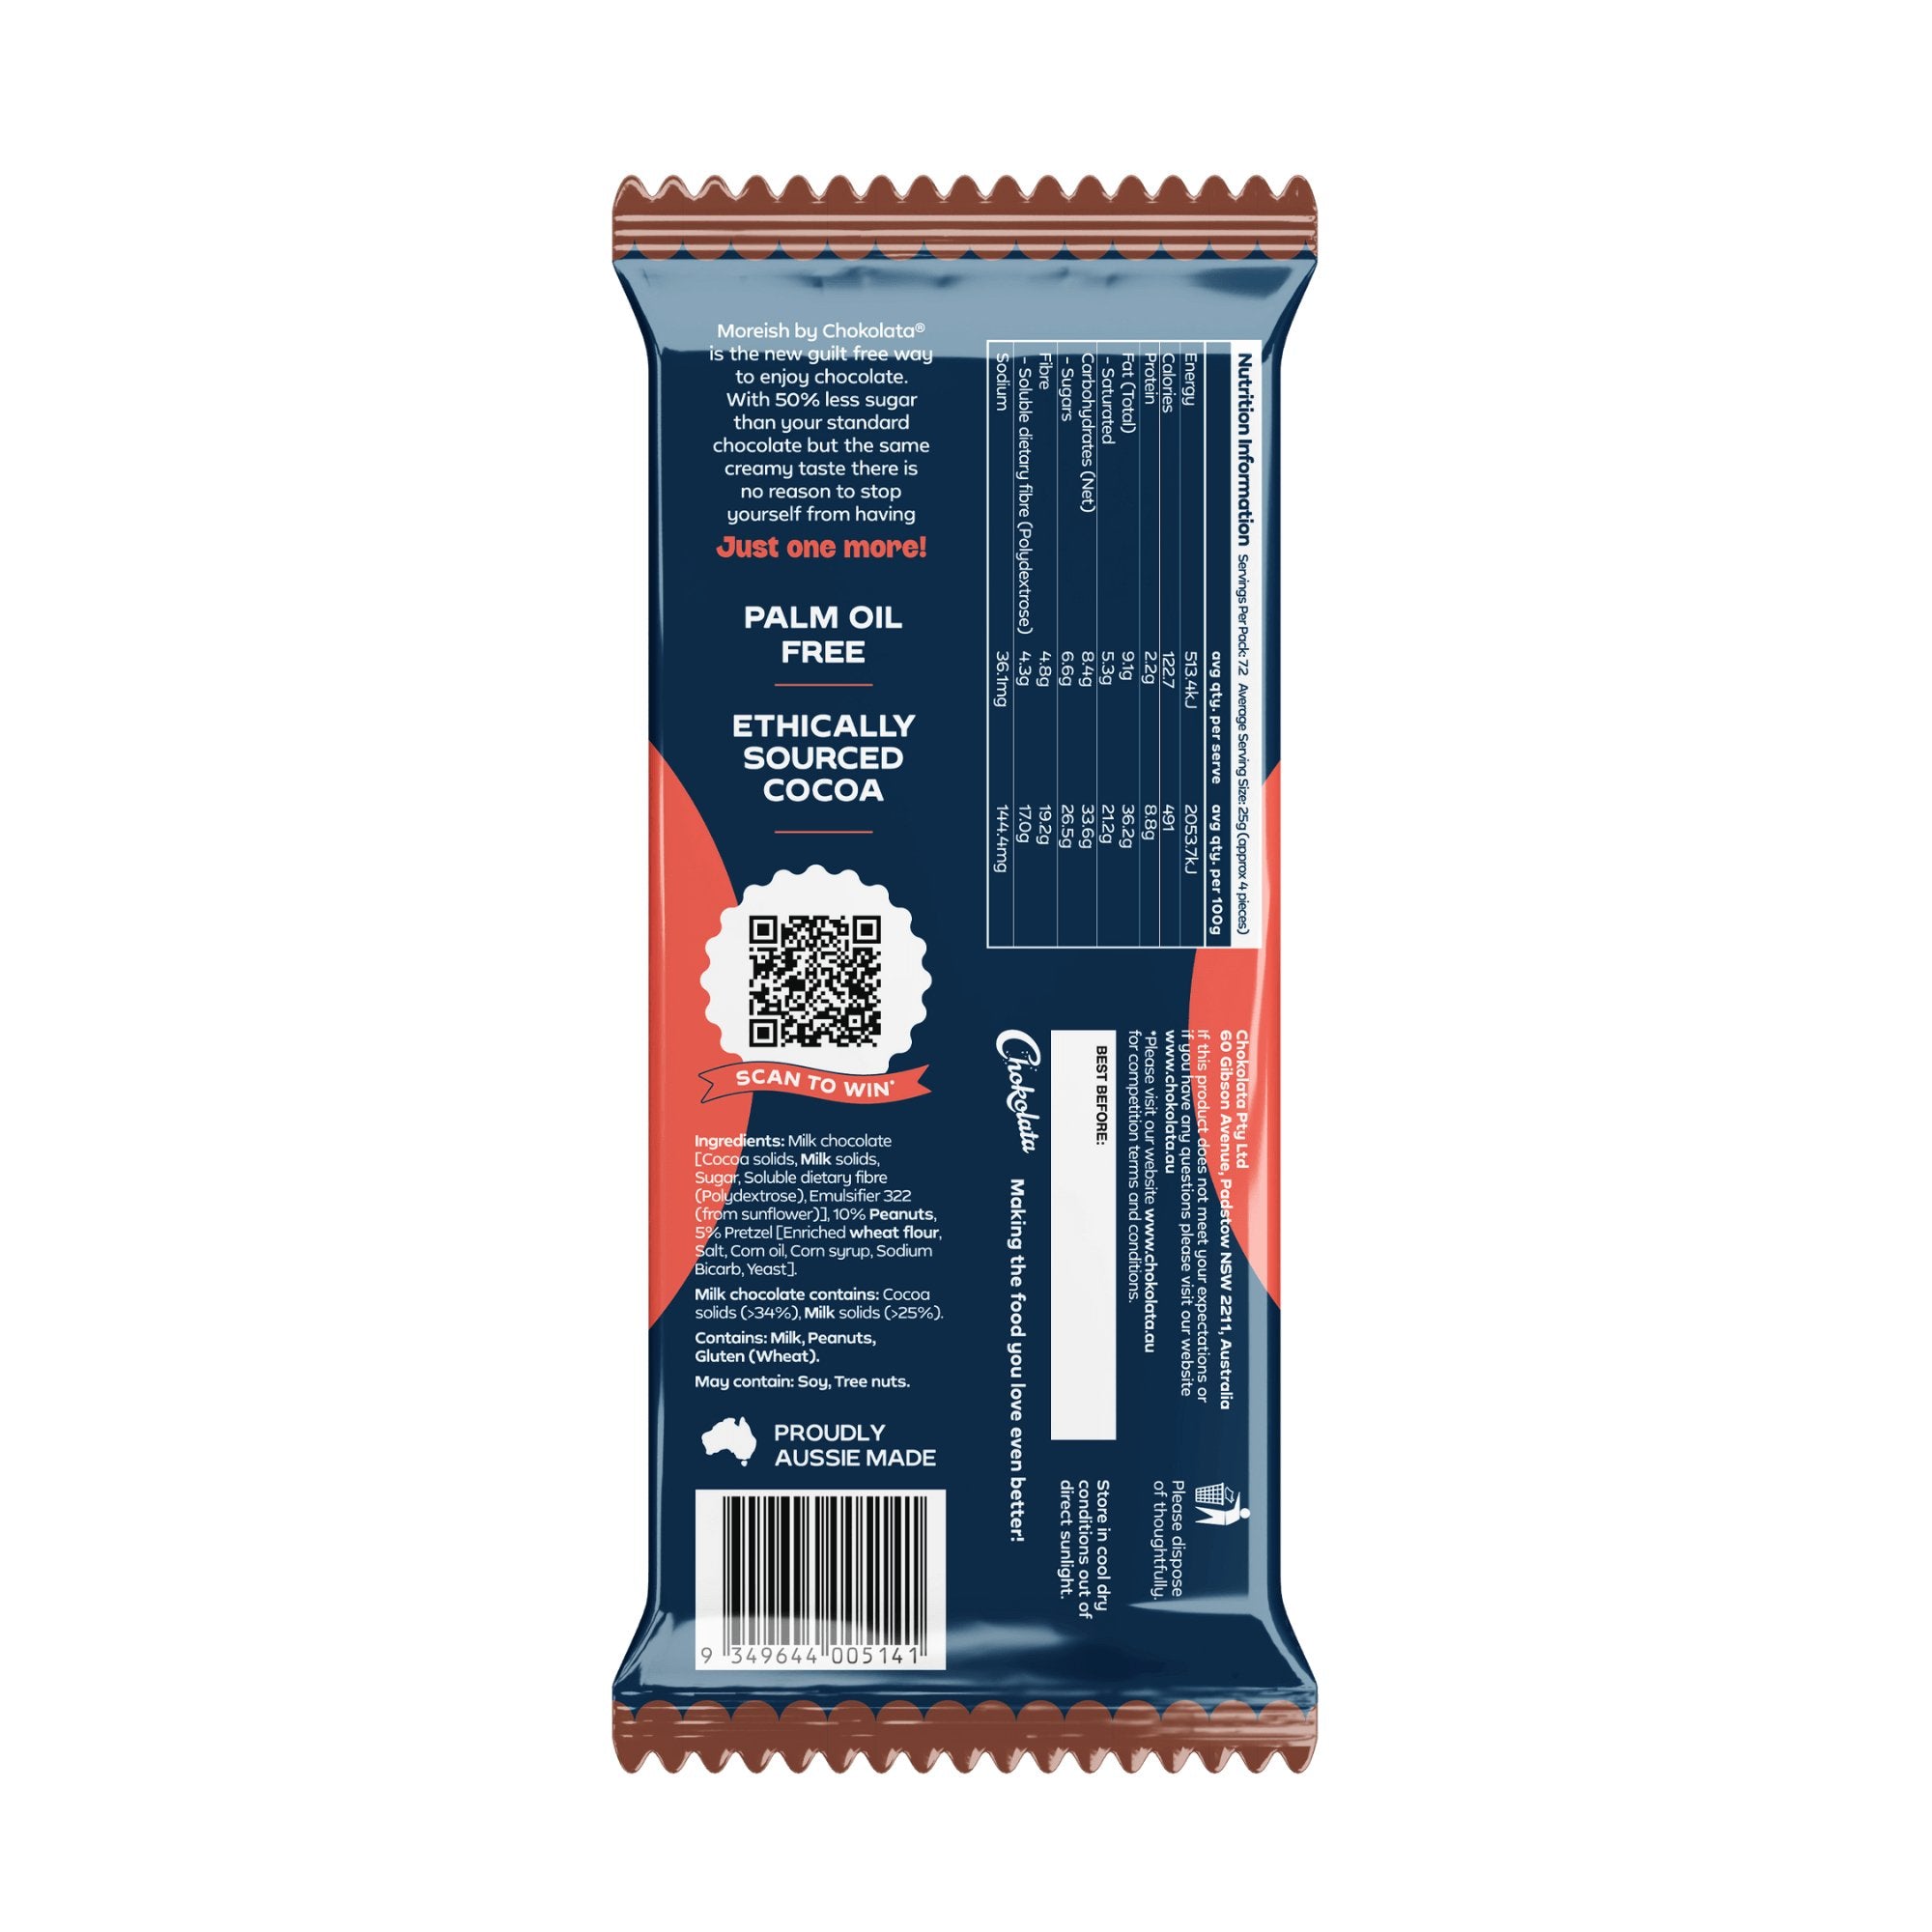 Moreish Peanut Pretzel Milk Chocolate | 180g - Chokolata-Moreish-chocolate- australian chocolate, australian chocolate brand, australian made chocolate, chocolates shop, australia chocolates, chocolates